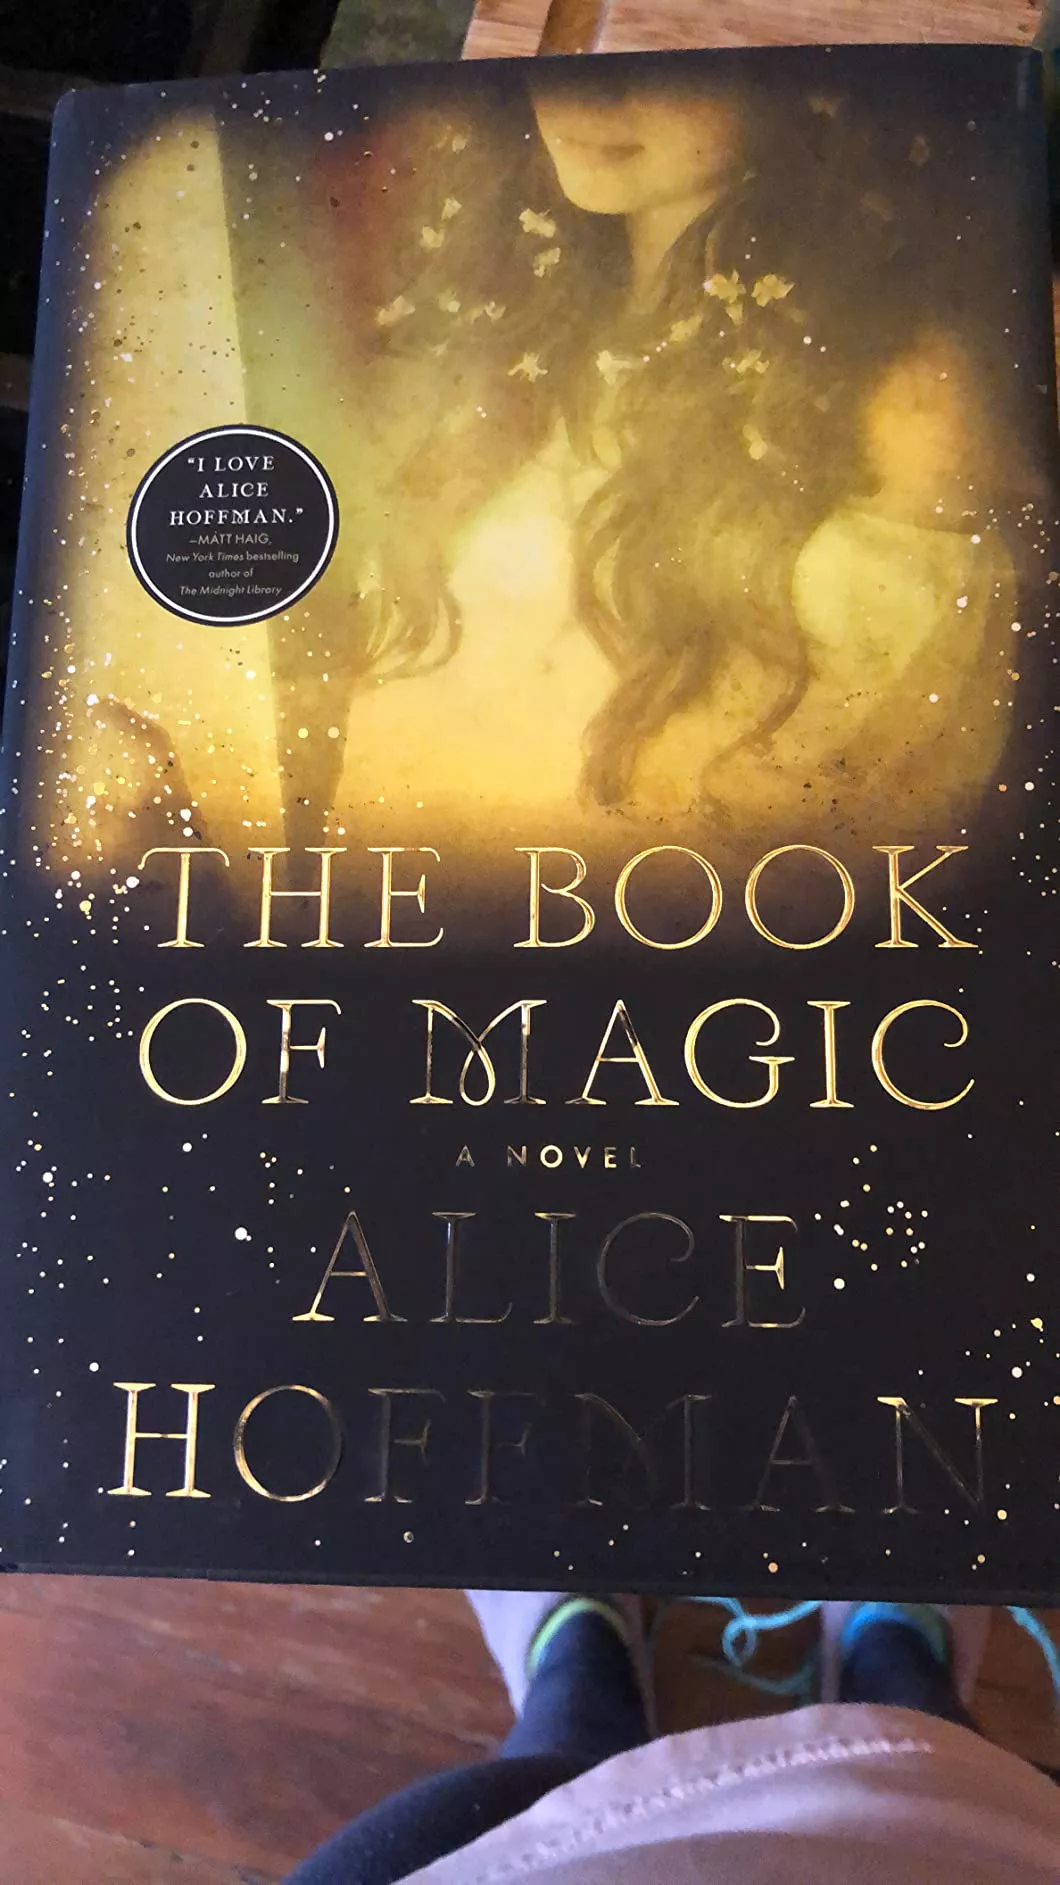 Practical Magic Series - Alice Hoffman